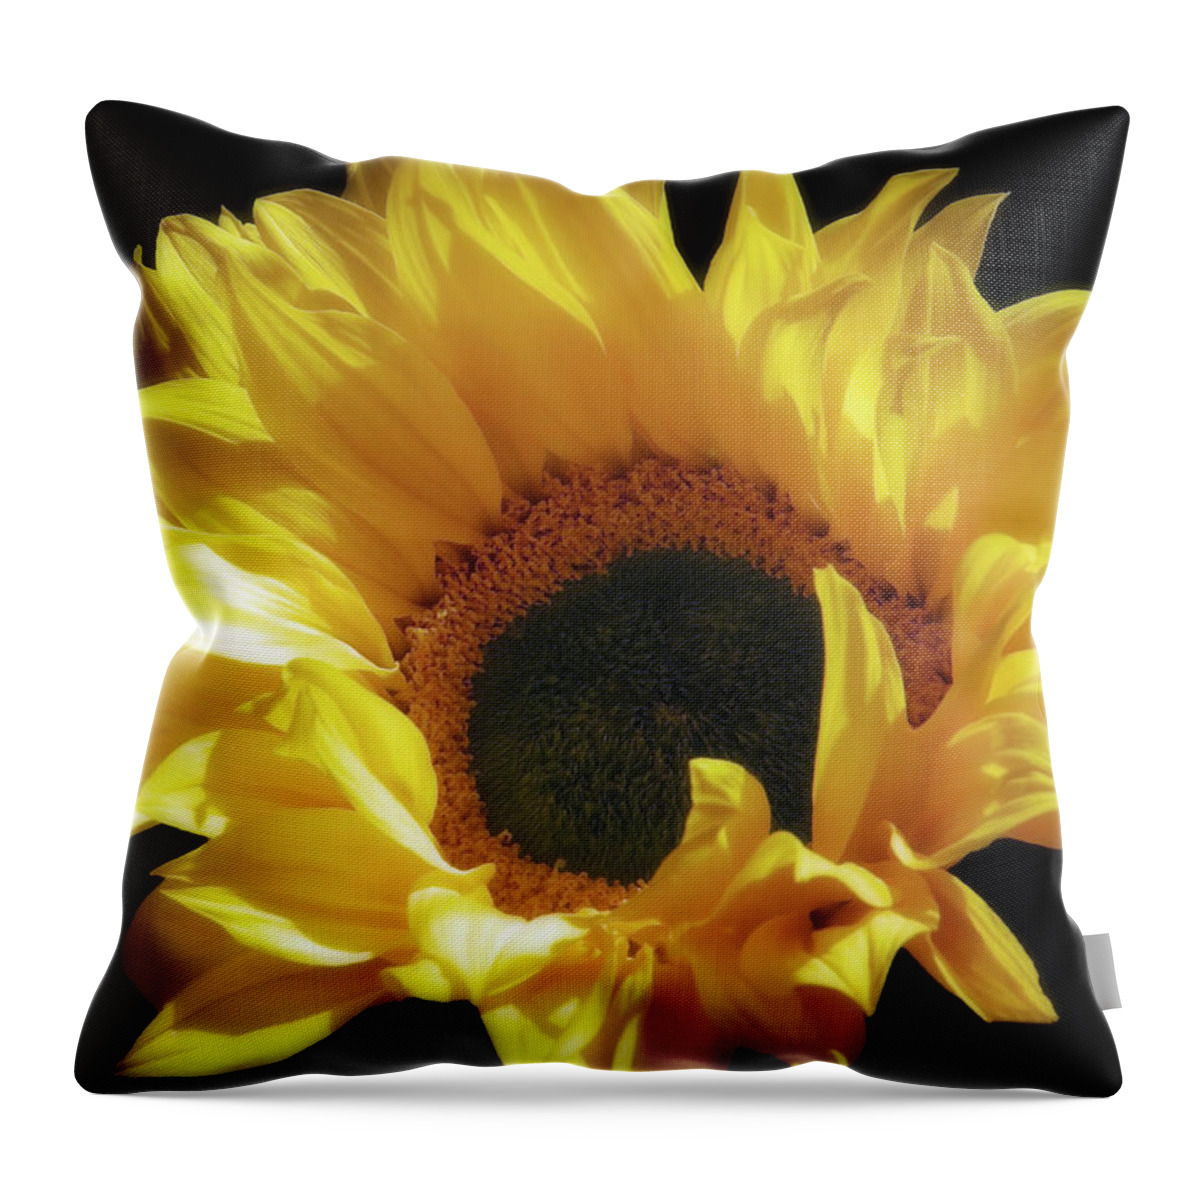 Flower Throw Pillow featuring the photograph Sunflower Beauty by Johanna Hurmerinta